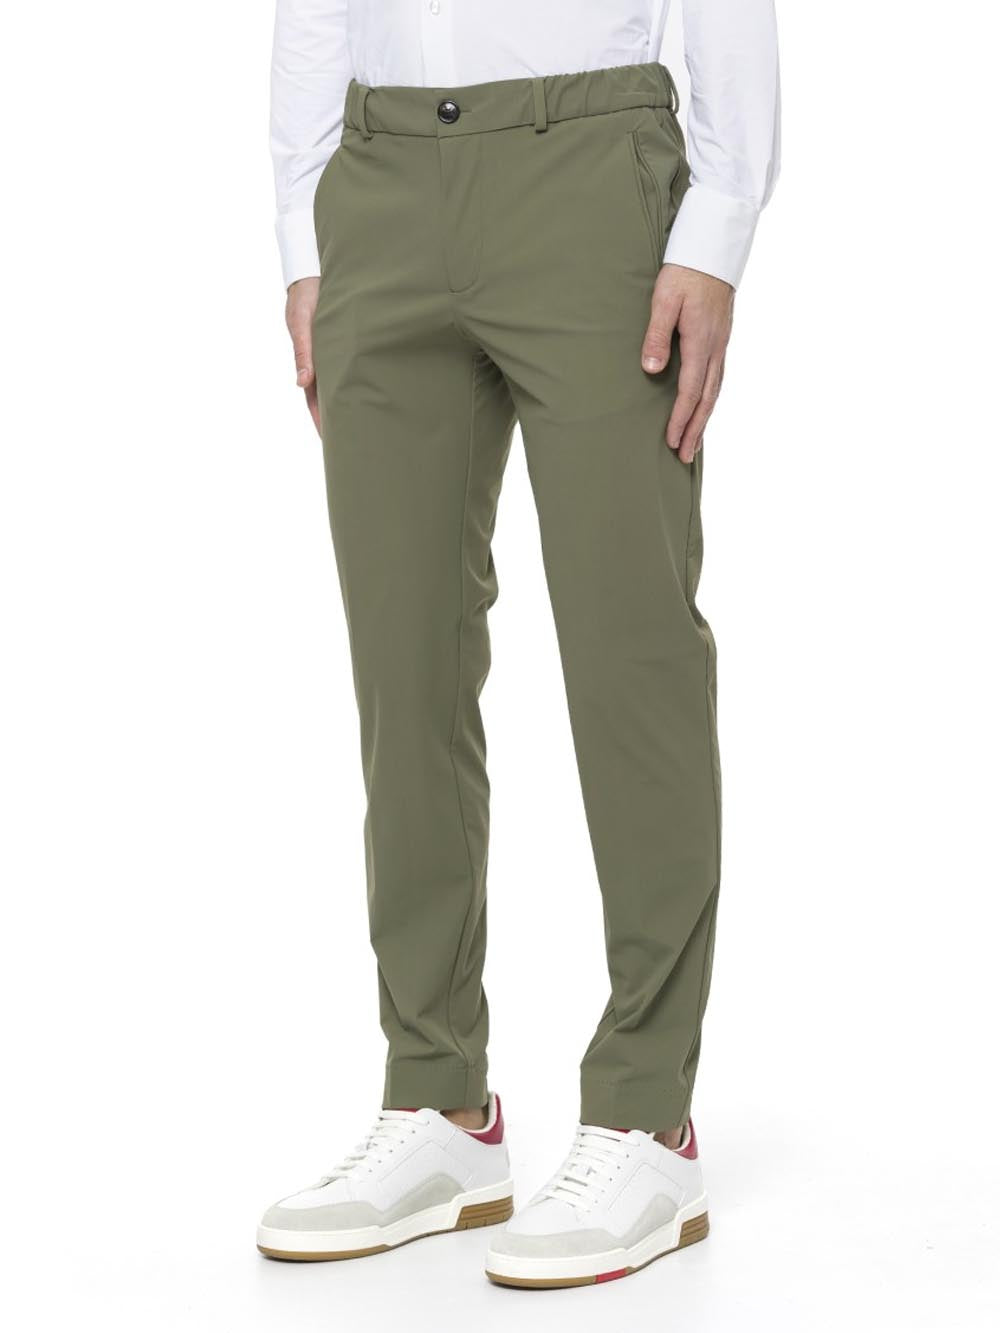 RRD Roberto Ricci Designs Pantalone Uomo Revo Chino Jo Pant Verde bosco